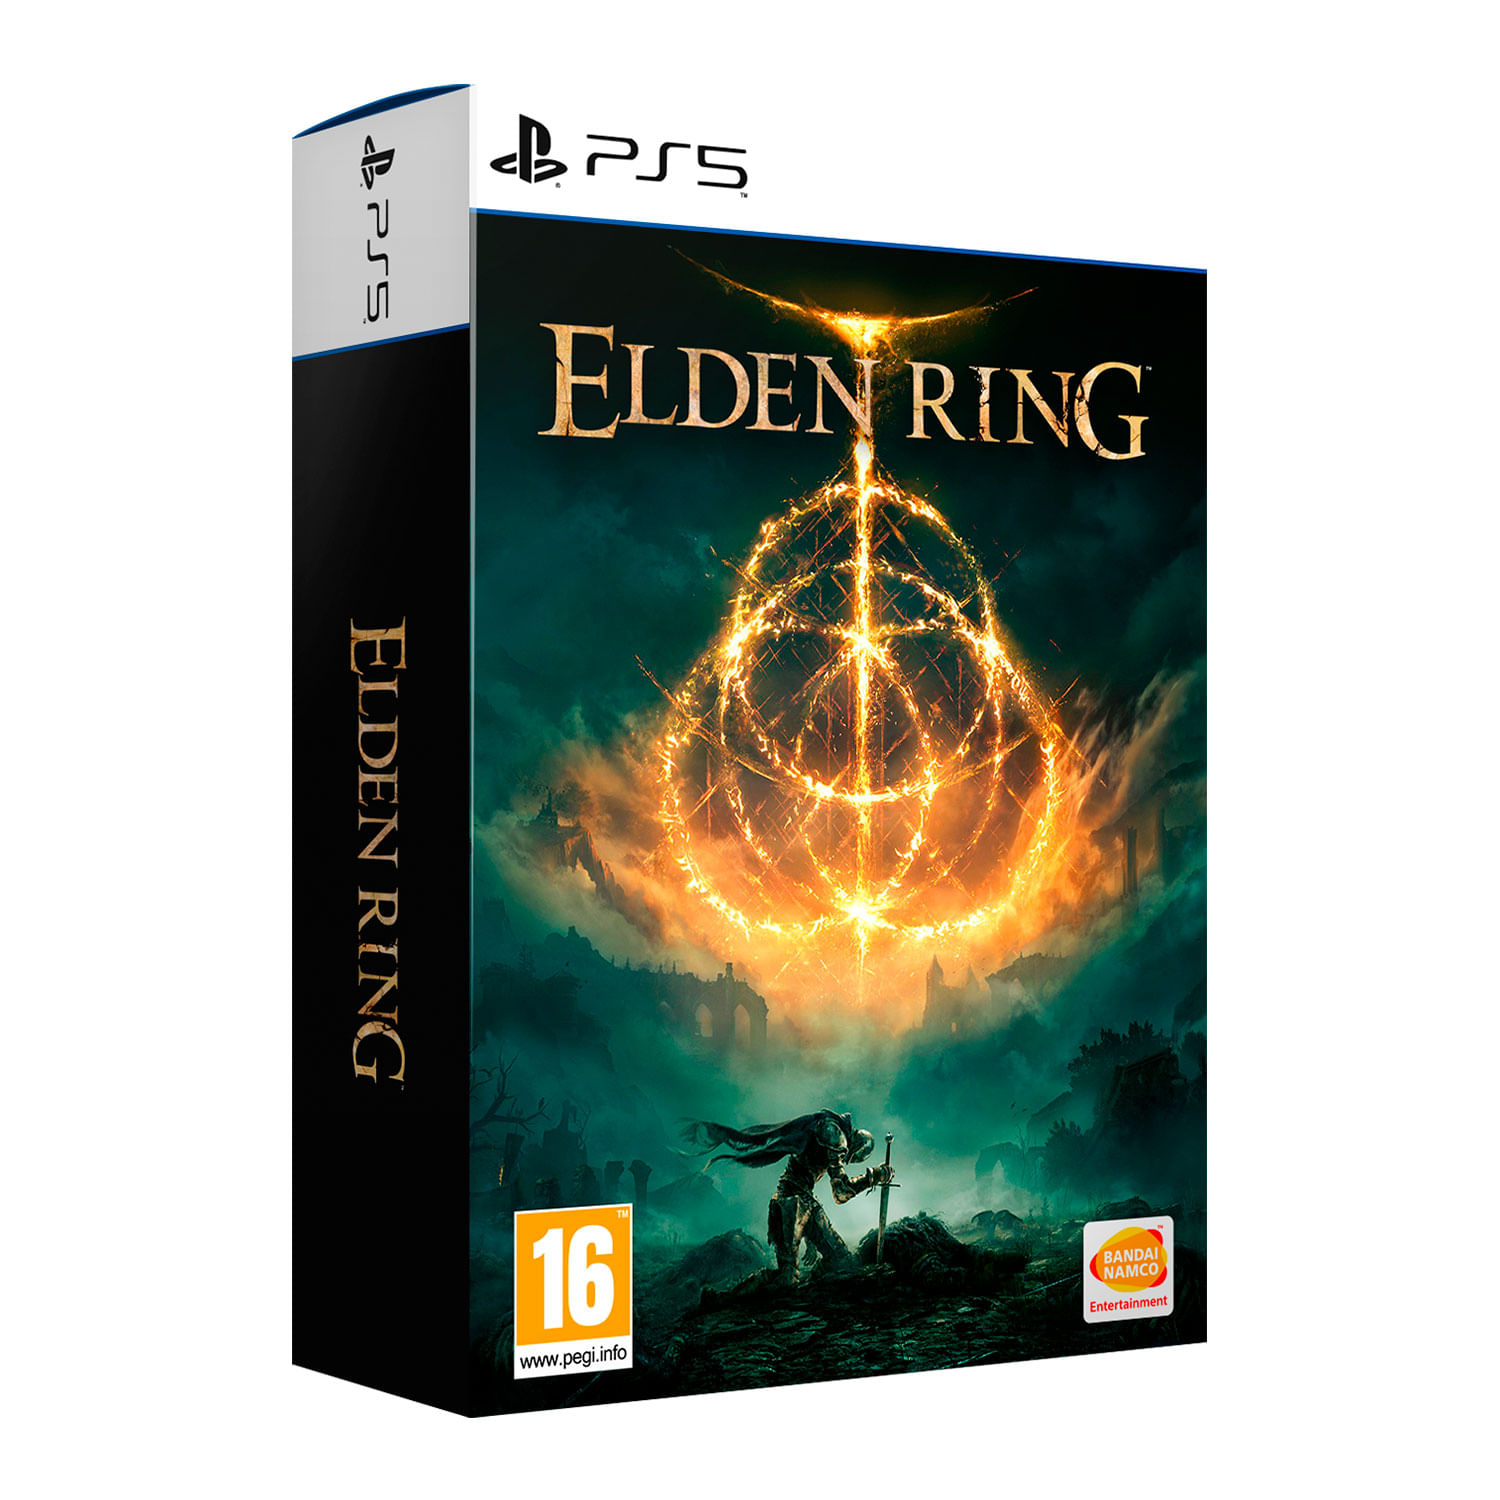 elden ring launch edition